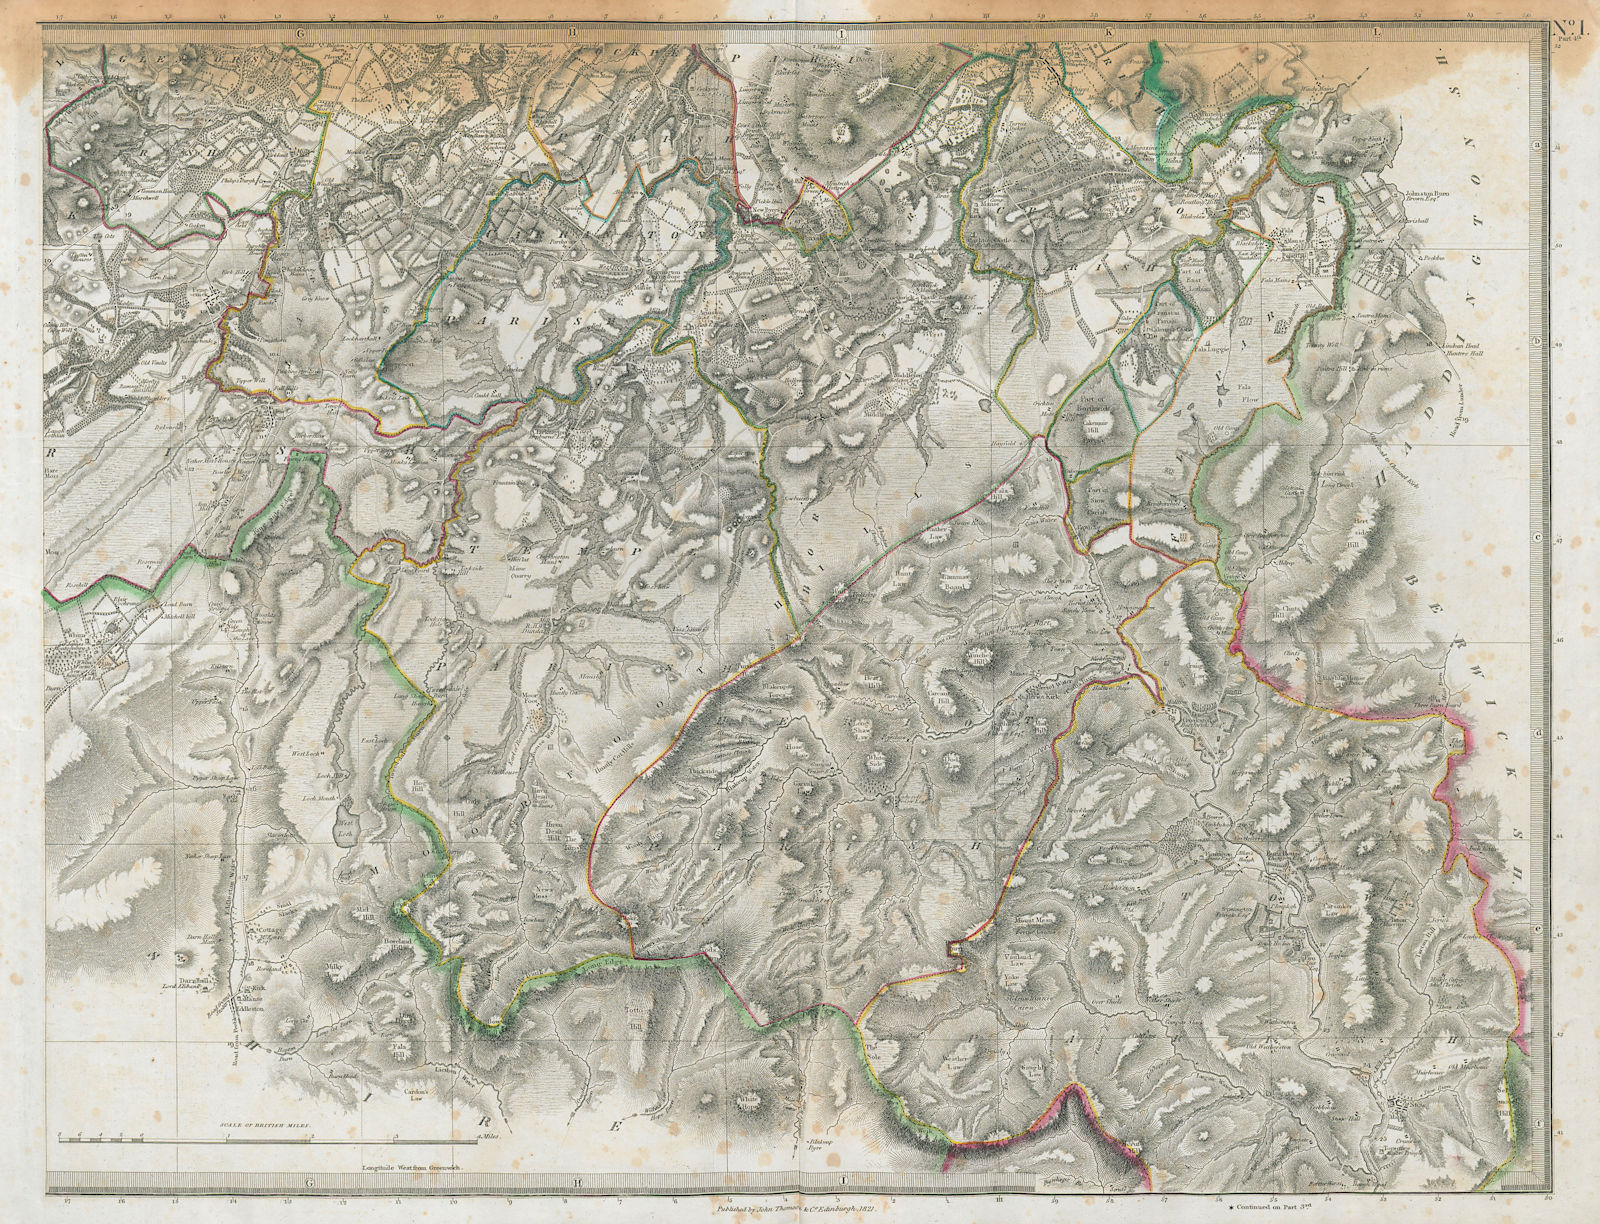 Edinburghshire south-east sheet. Midlothian. Penicuik. THOMSON 1832 old map